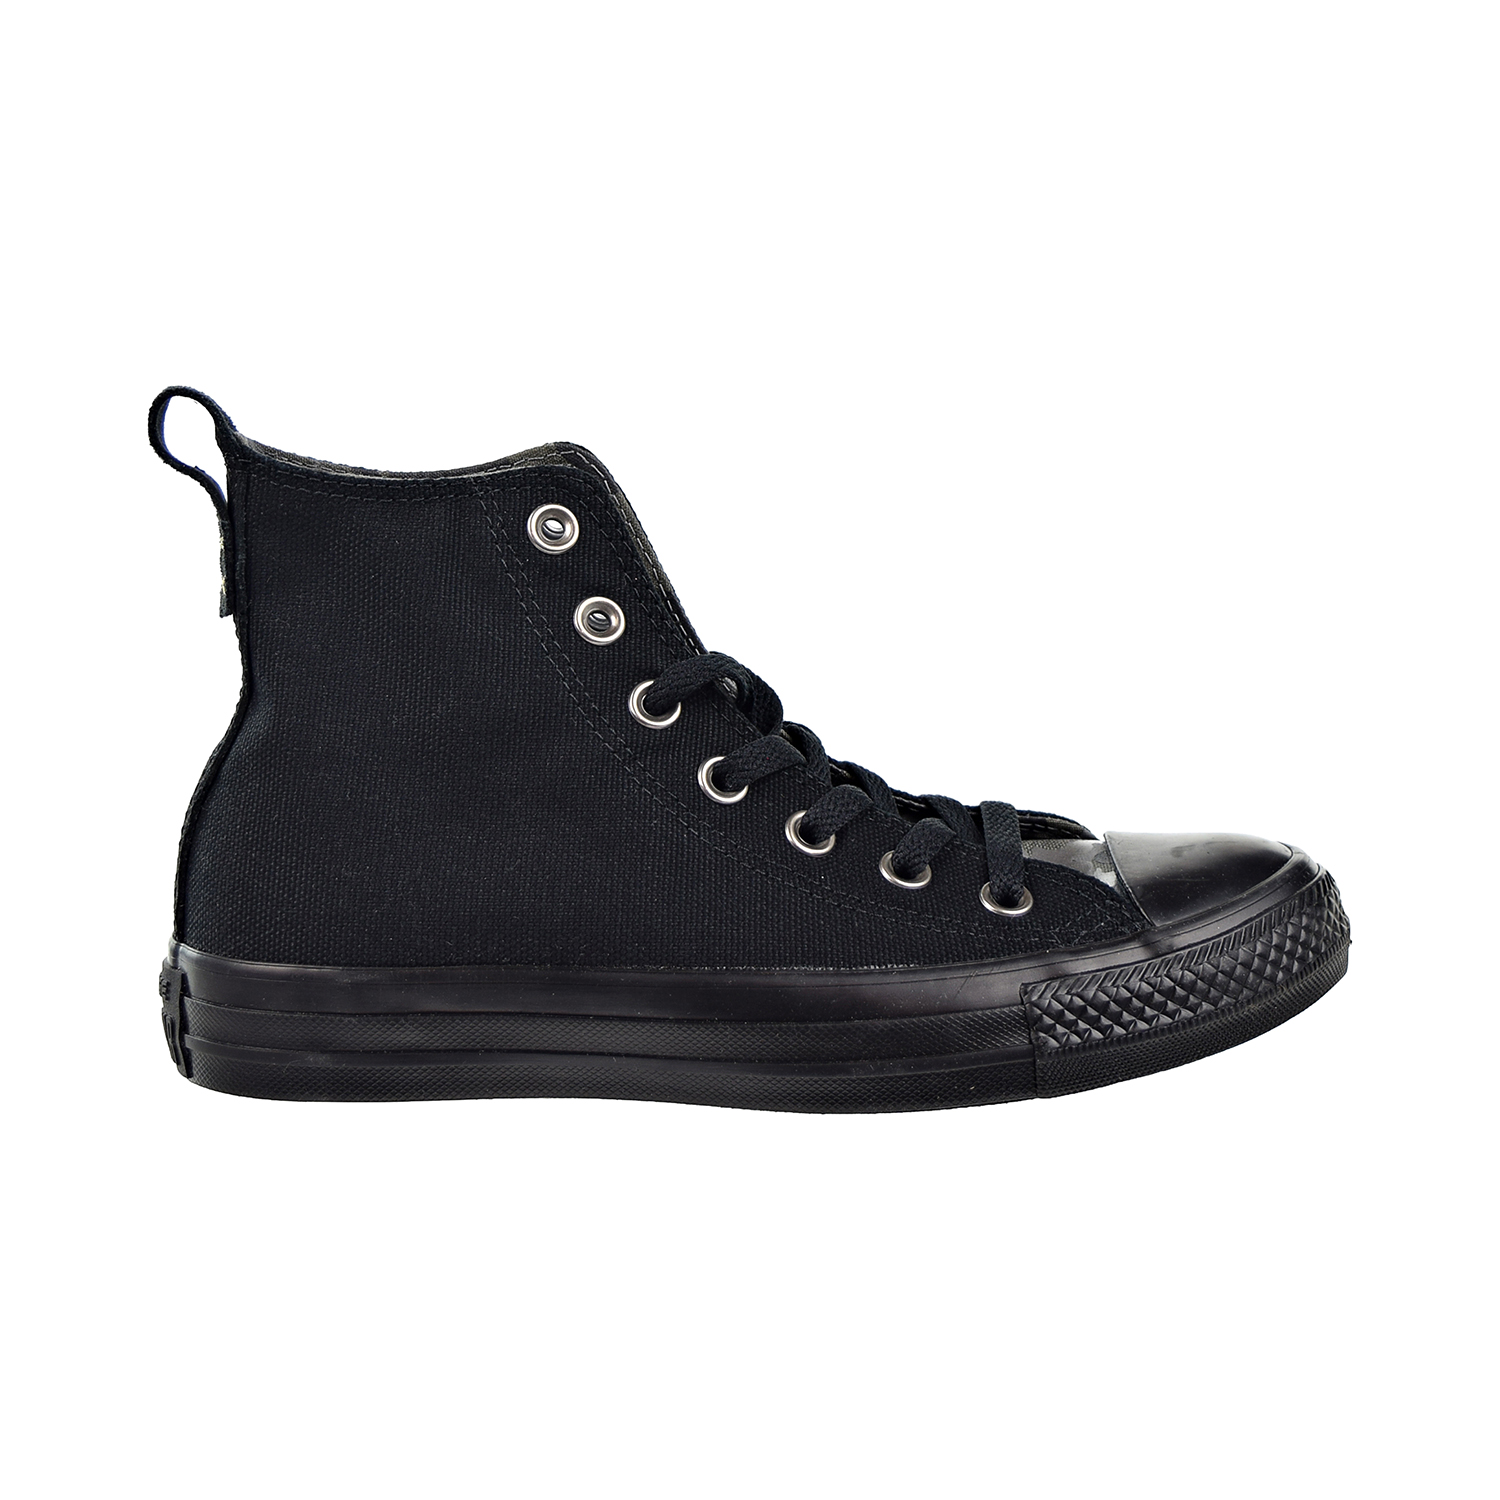 Converse Chuck Taylor All Star Hi Mens Shoes Black/Mason Black 159753c - image 1 of 6